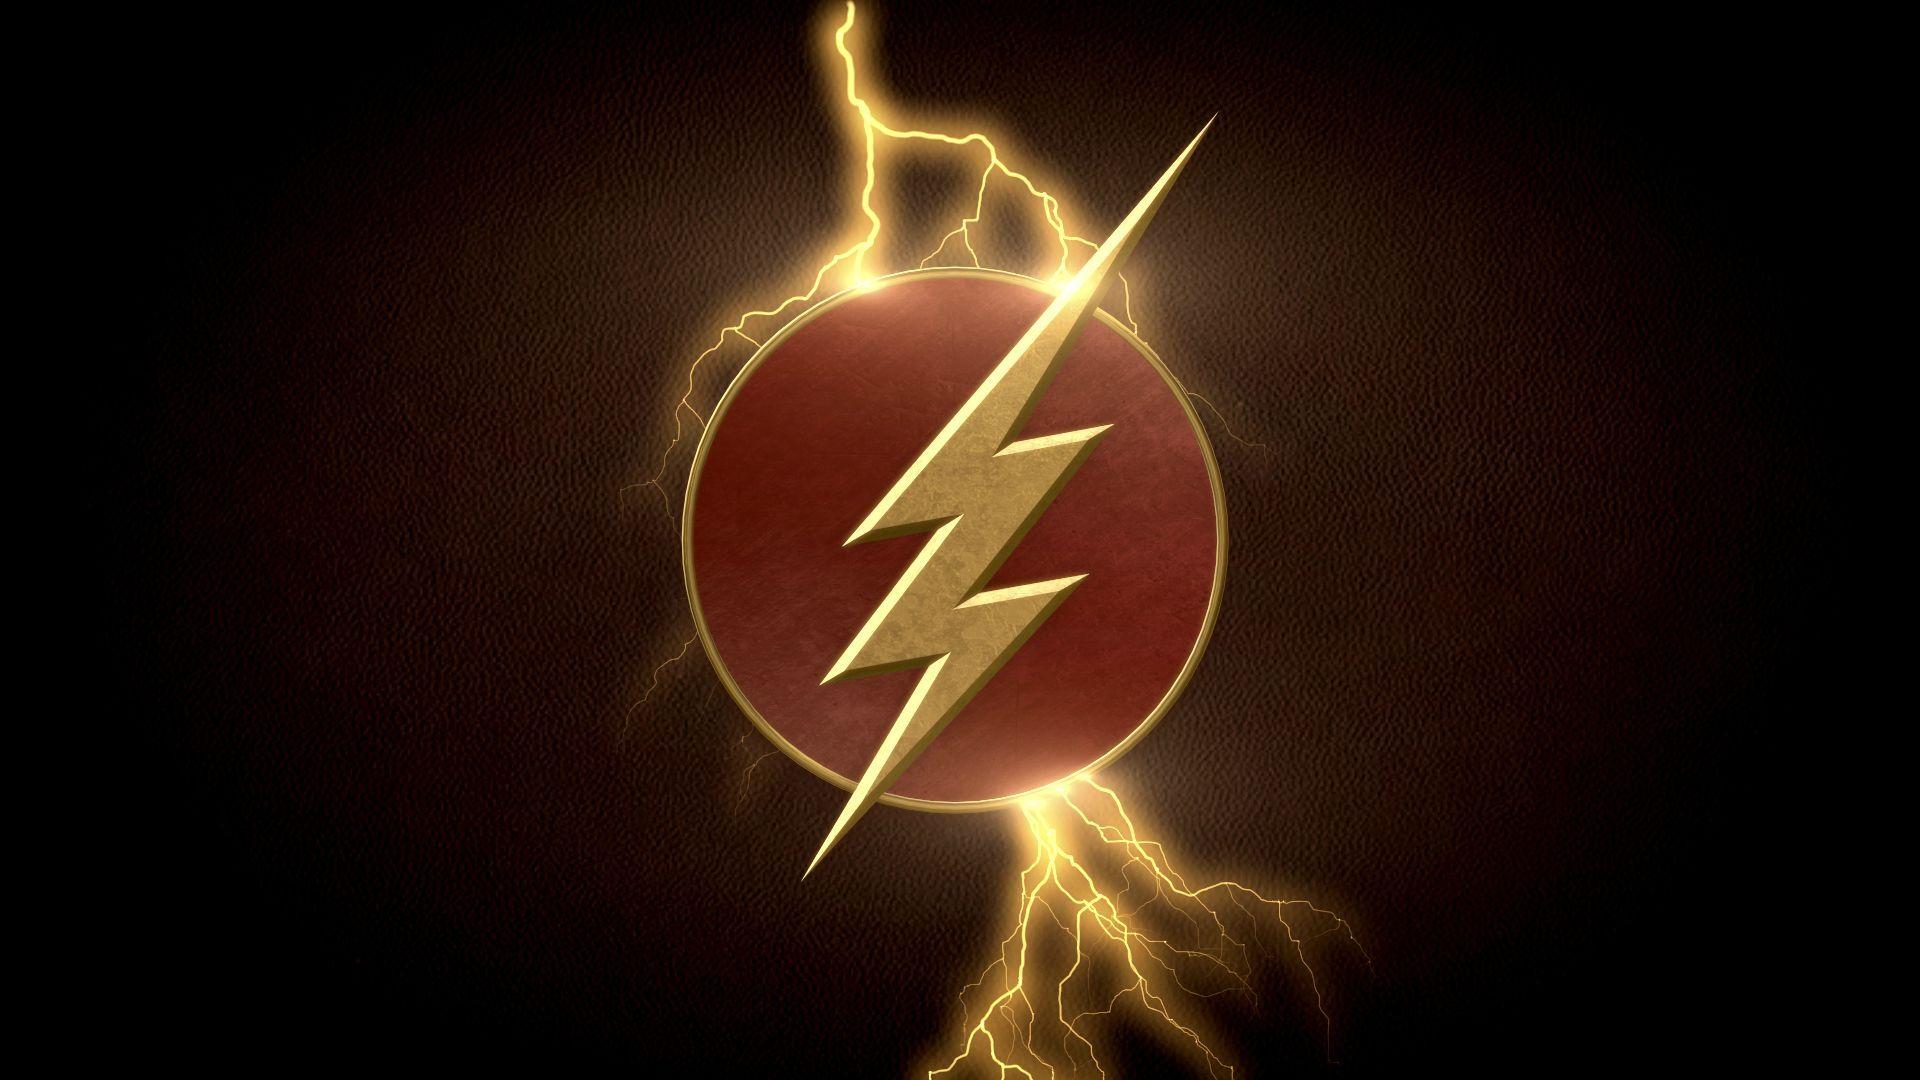 The Flash Lightning Art Wallpapers